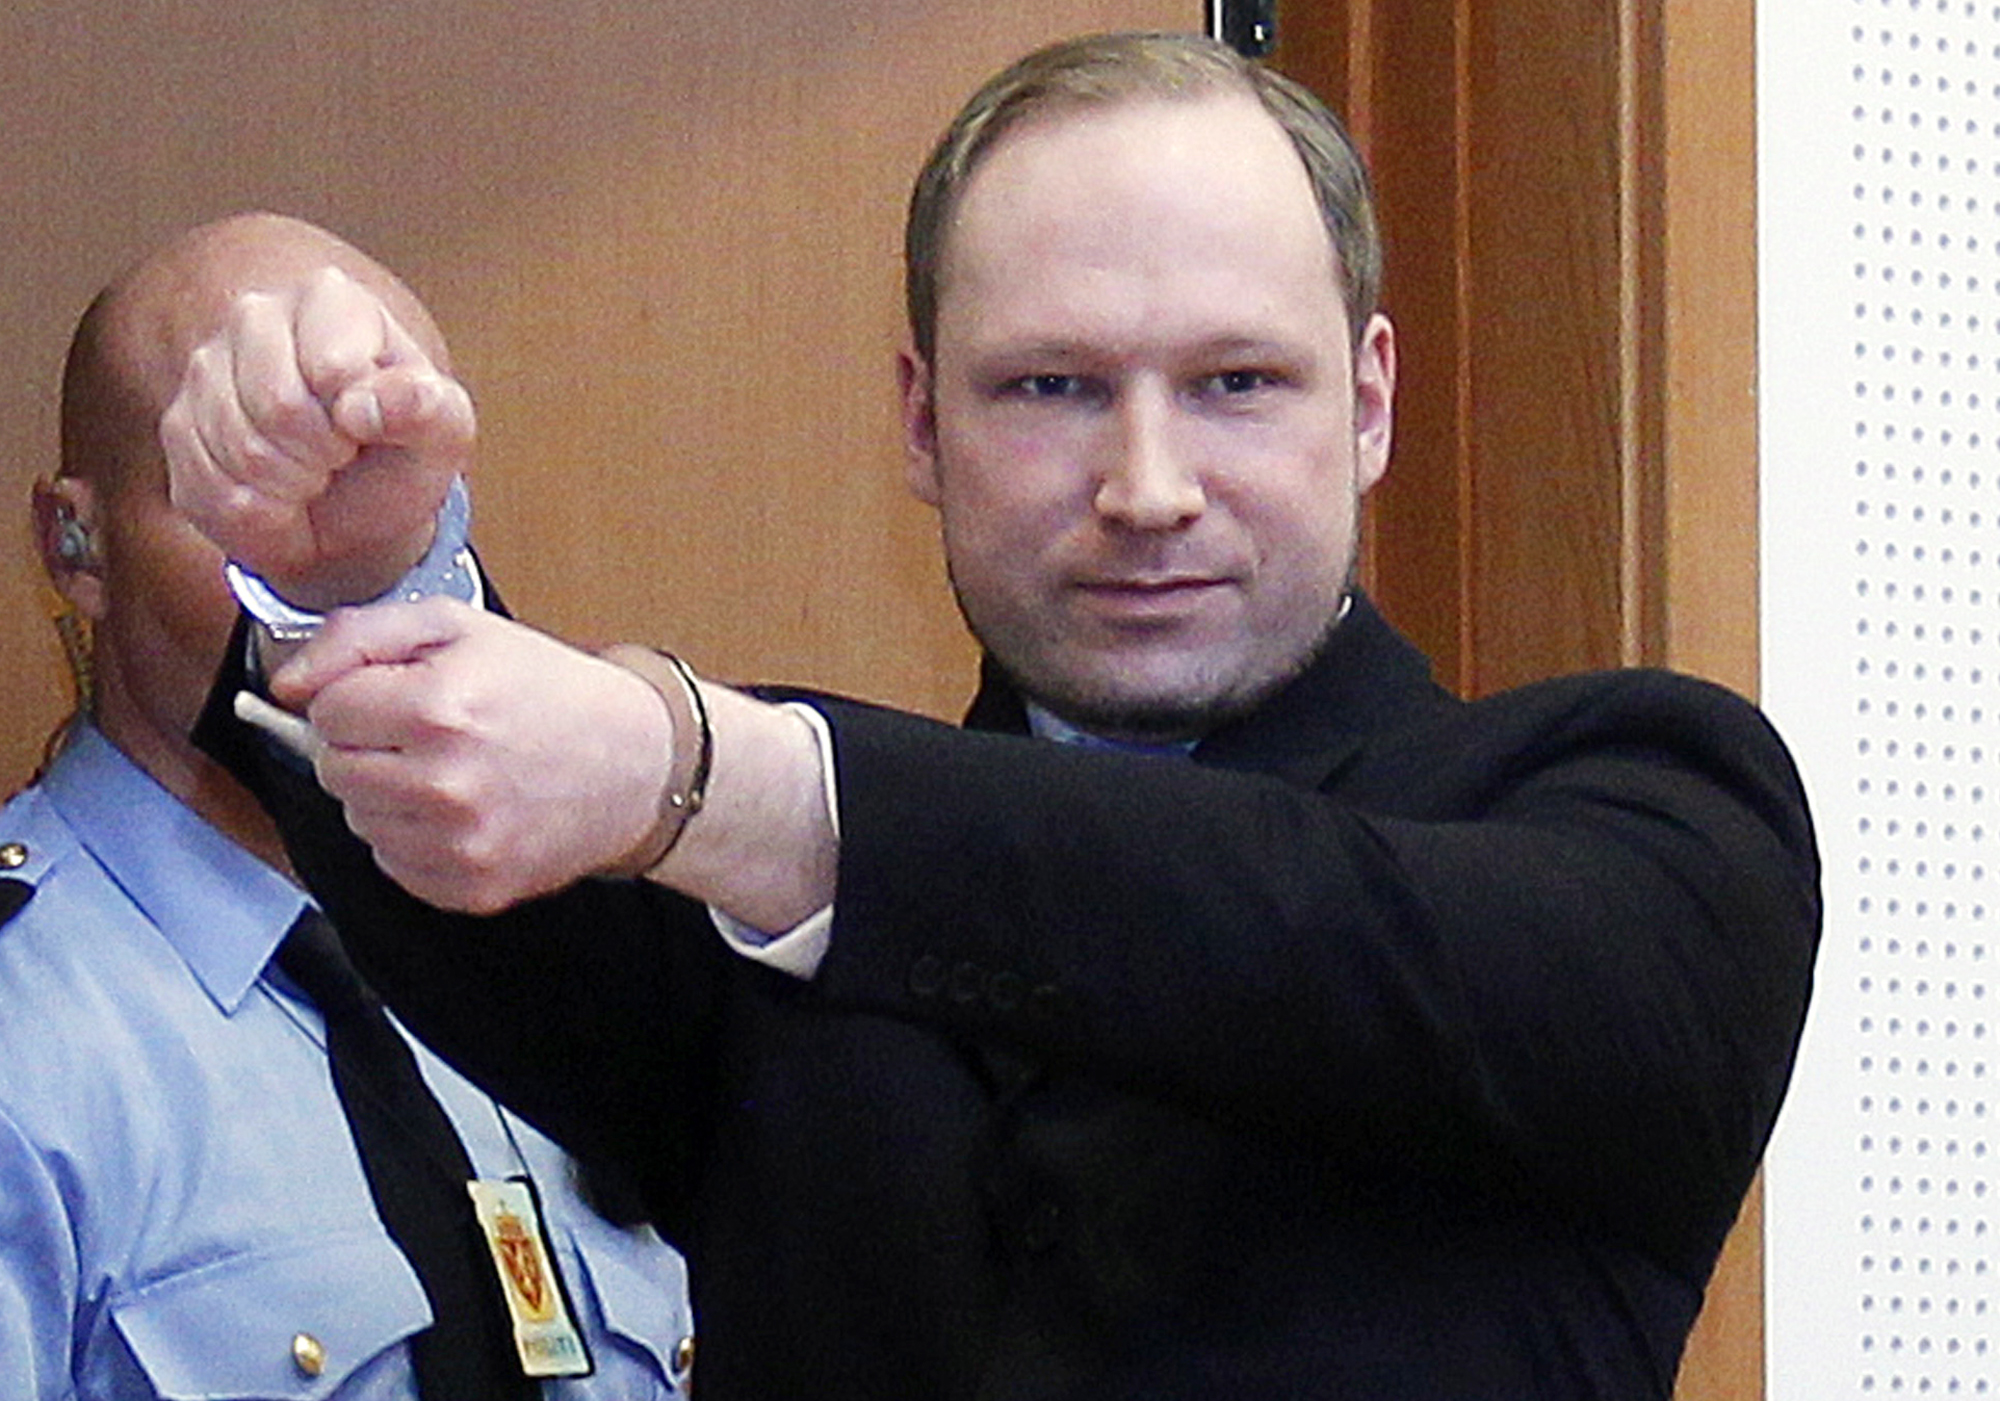 Domstol, Stämning, Anders Behring Breivik, Norge, Utøya, Fängelse, Staten